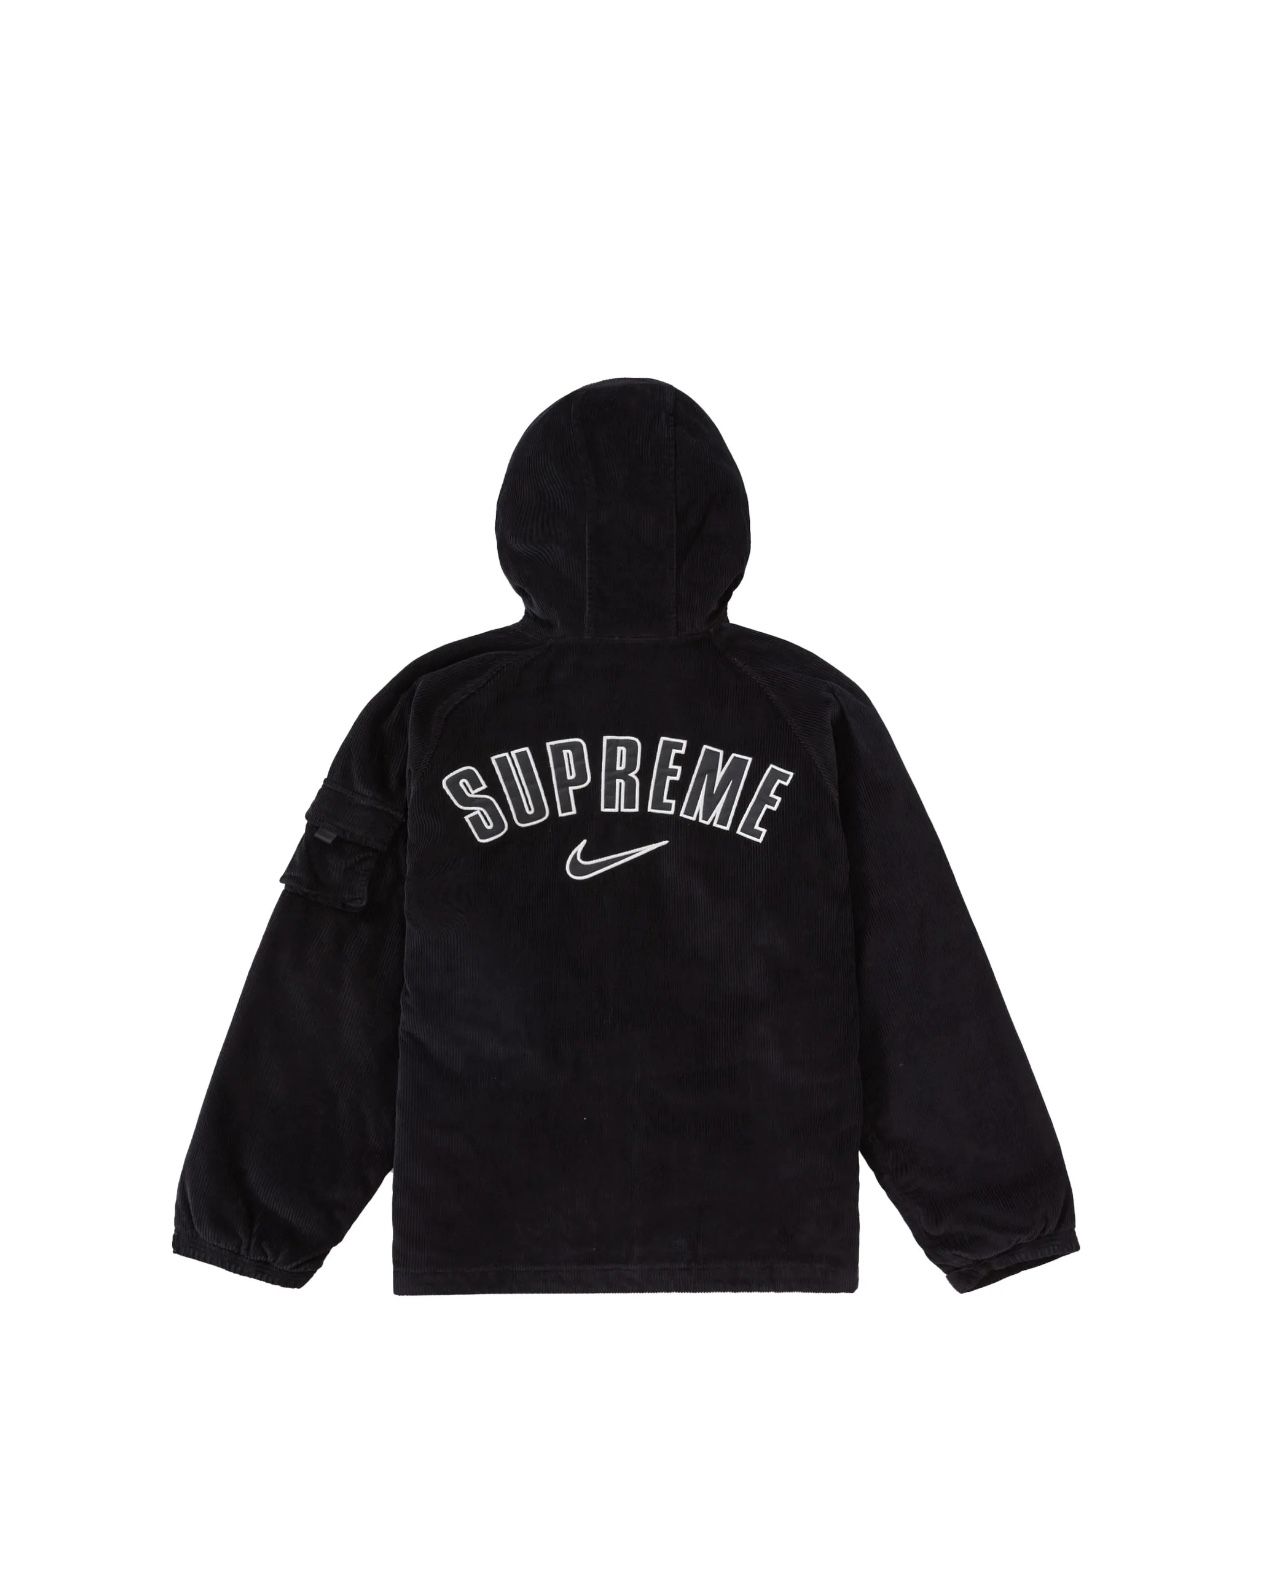 Supreme/Nike Arc hooded Jacket Size M